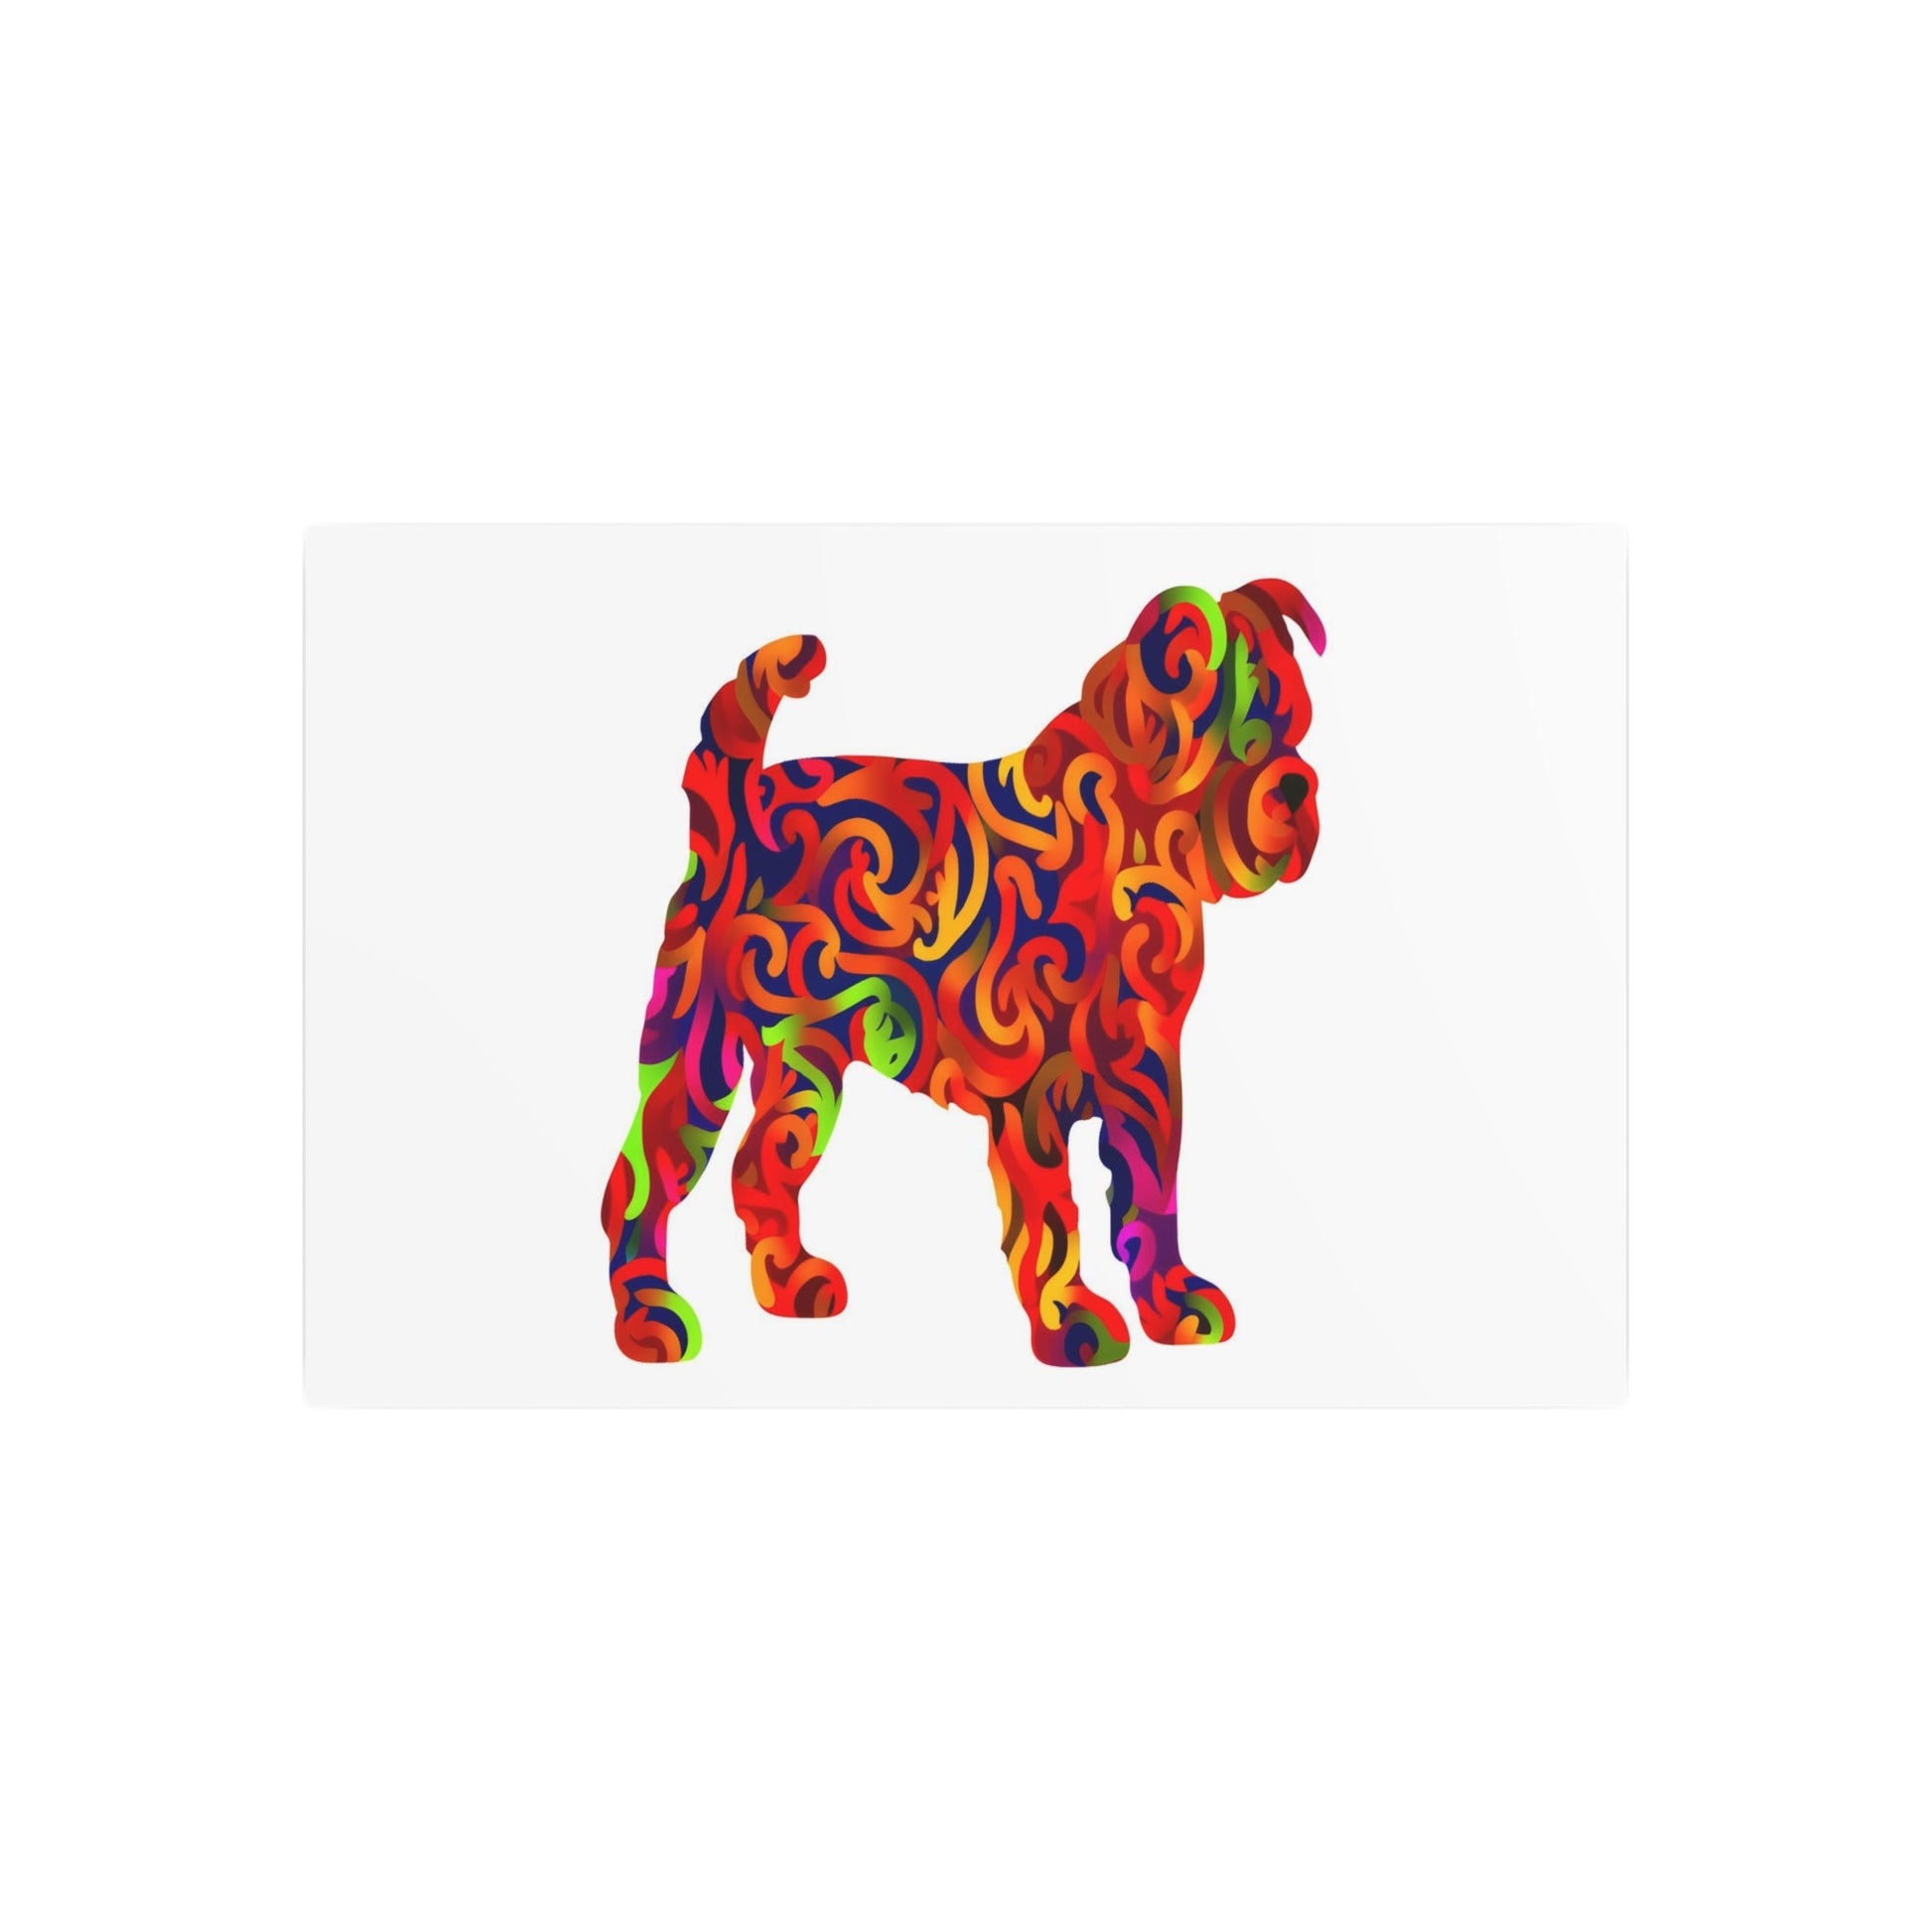 Metal Poster Art | "Indonesian Batik Art Dog Print - Vibrant, Intricate Non-Western Style Decorative Image" - Metal Poster Art 36″ x 24″ (Horizontal) 0.12''